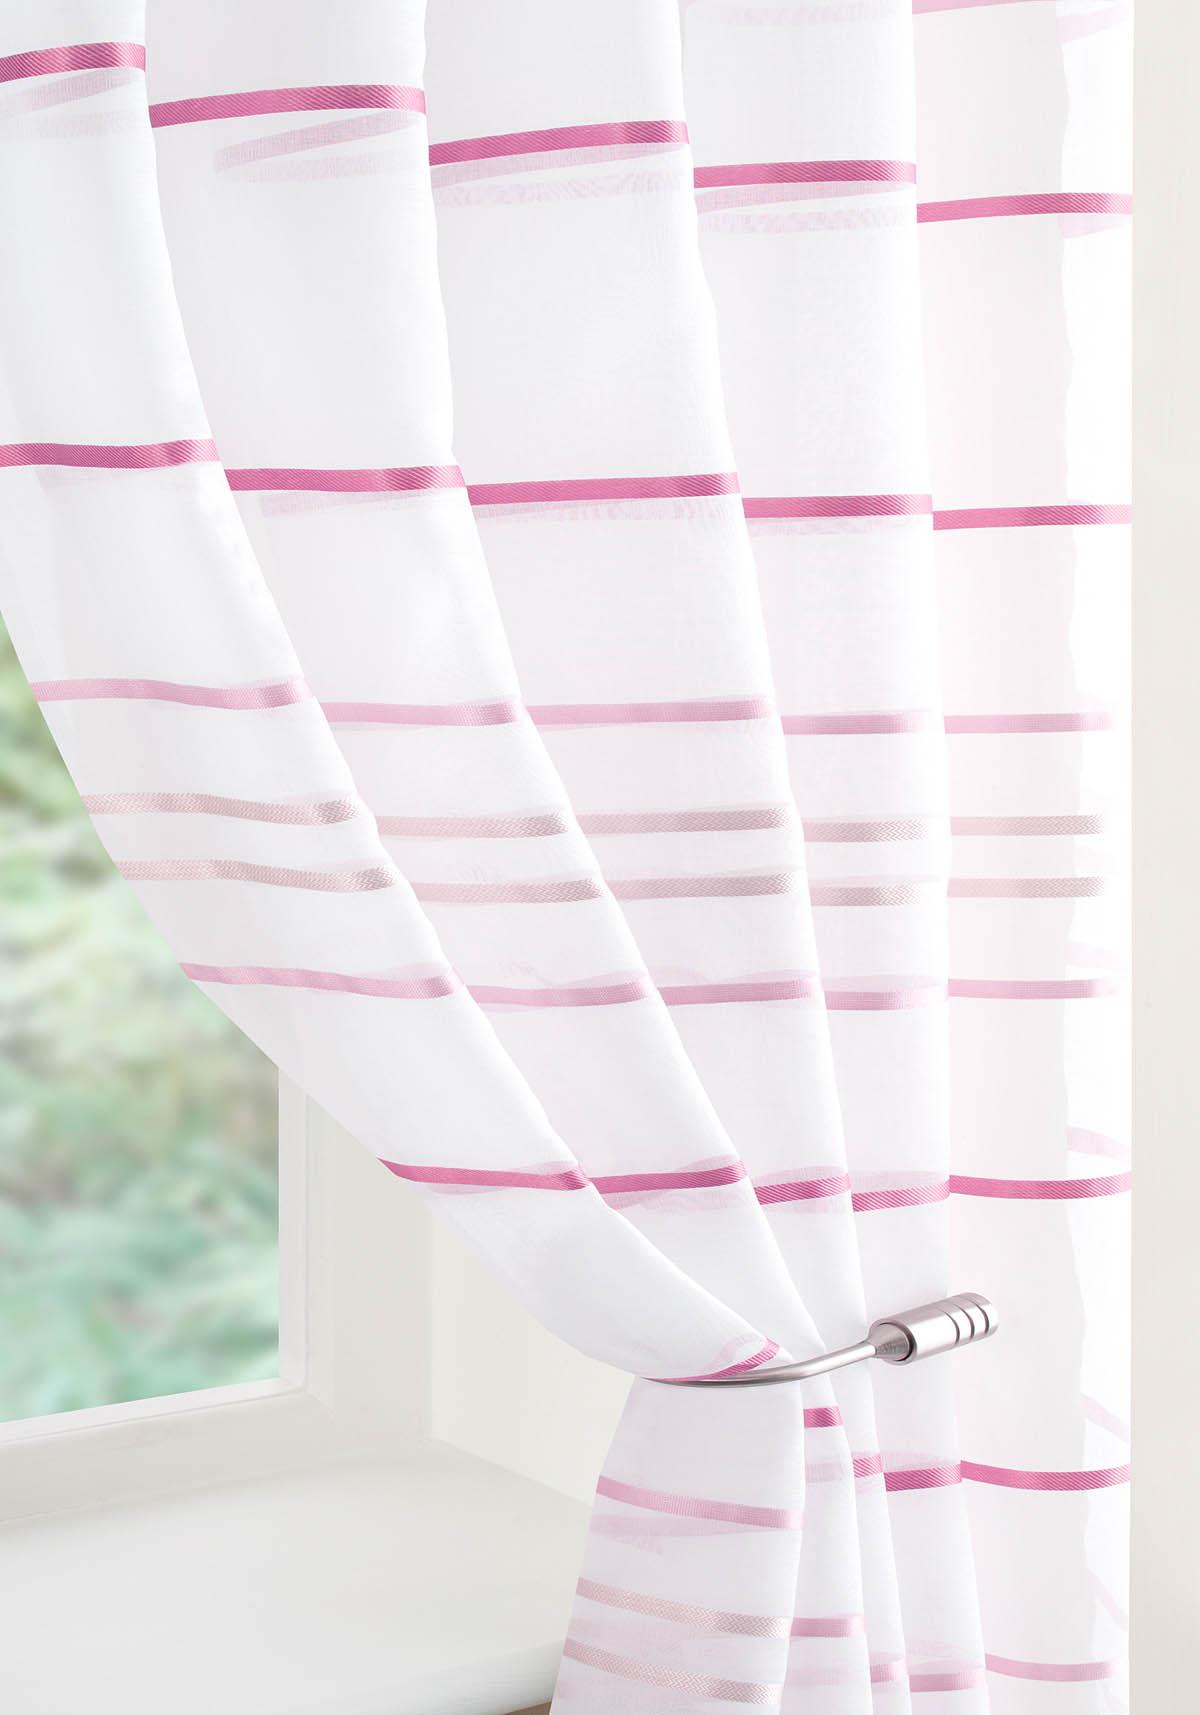 Ribbon Glued Curtain6 37+ Creative Curtains Design Ideas To DIY - 11